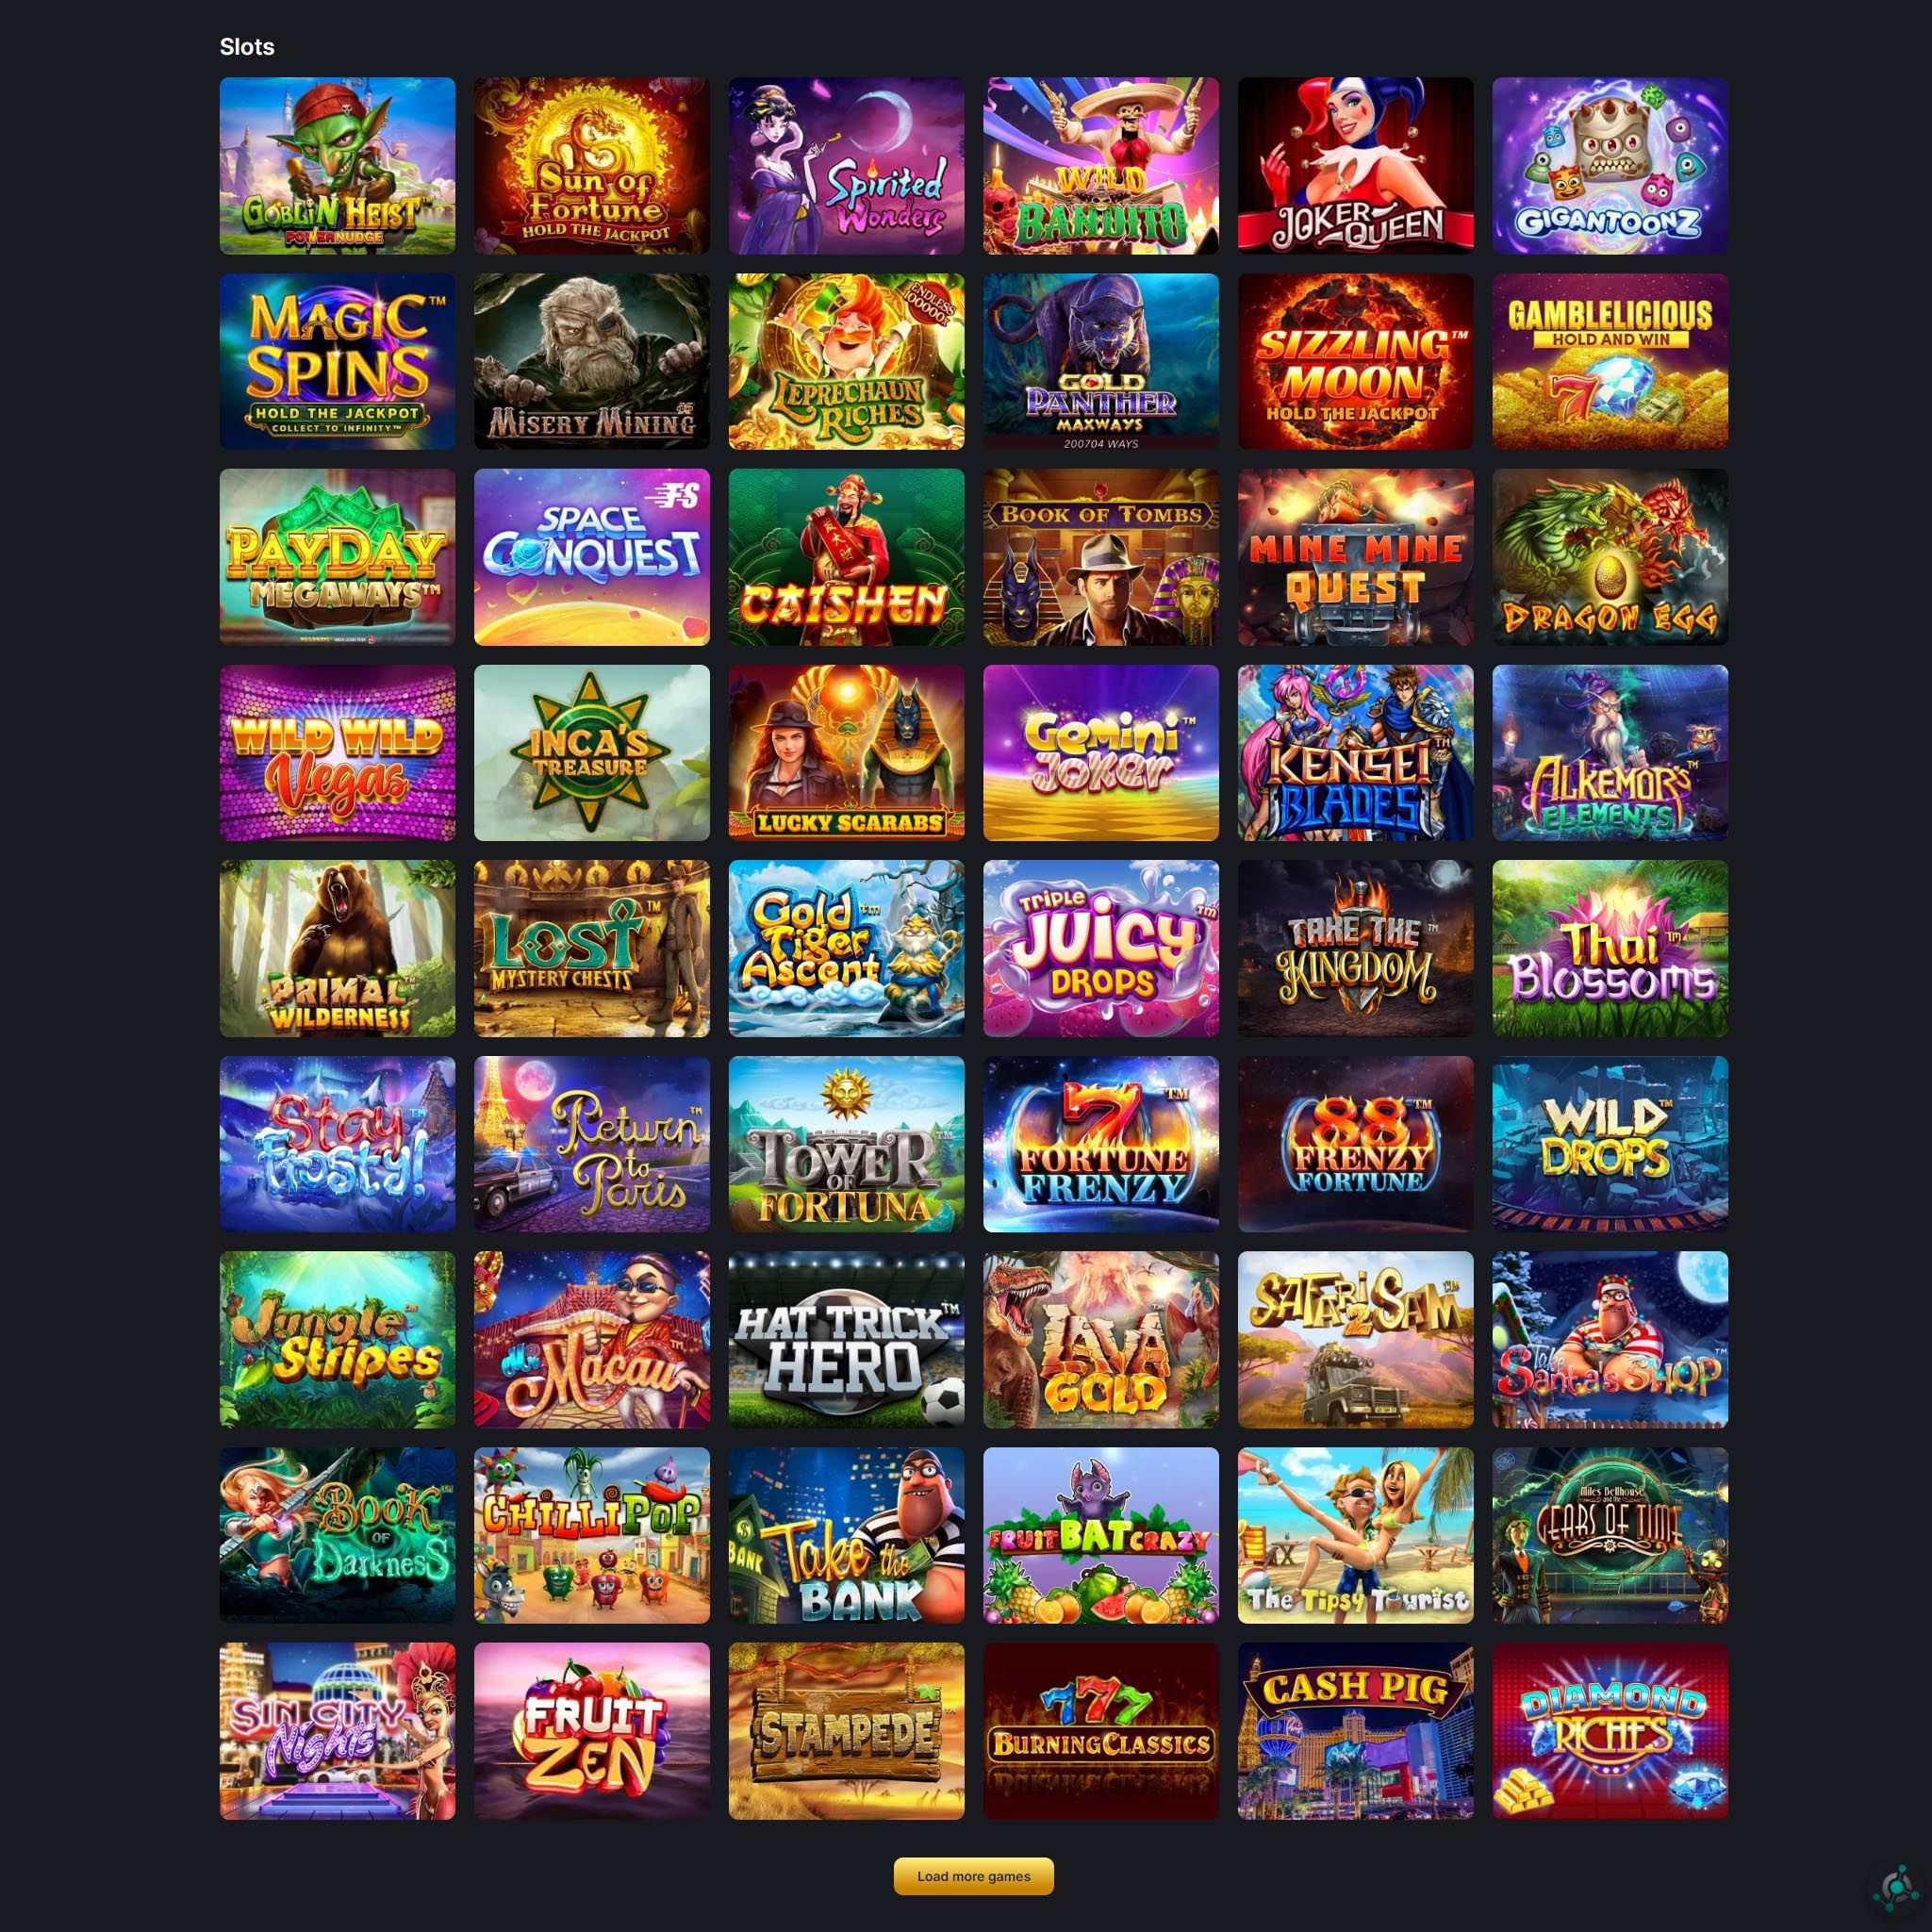 Spotgaming Casino full games catalogue